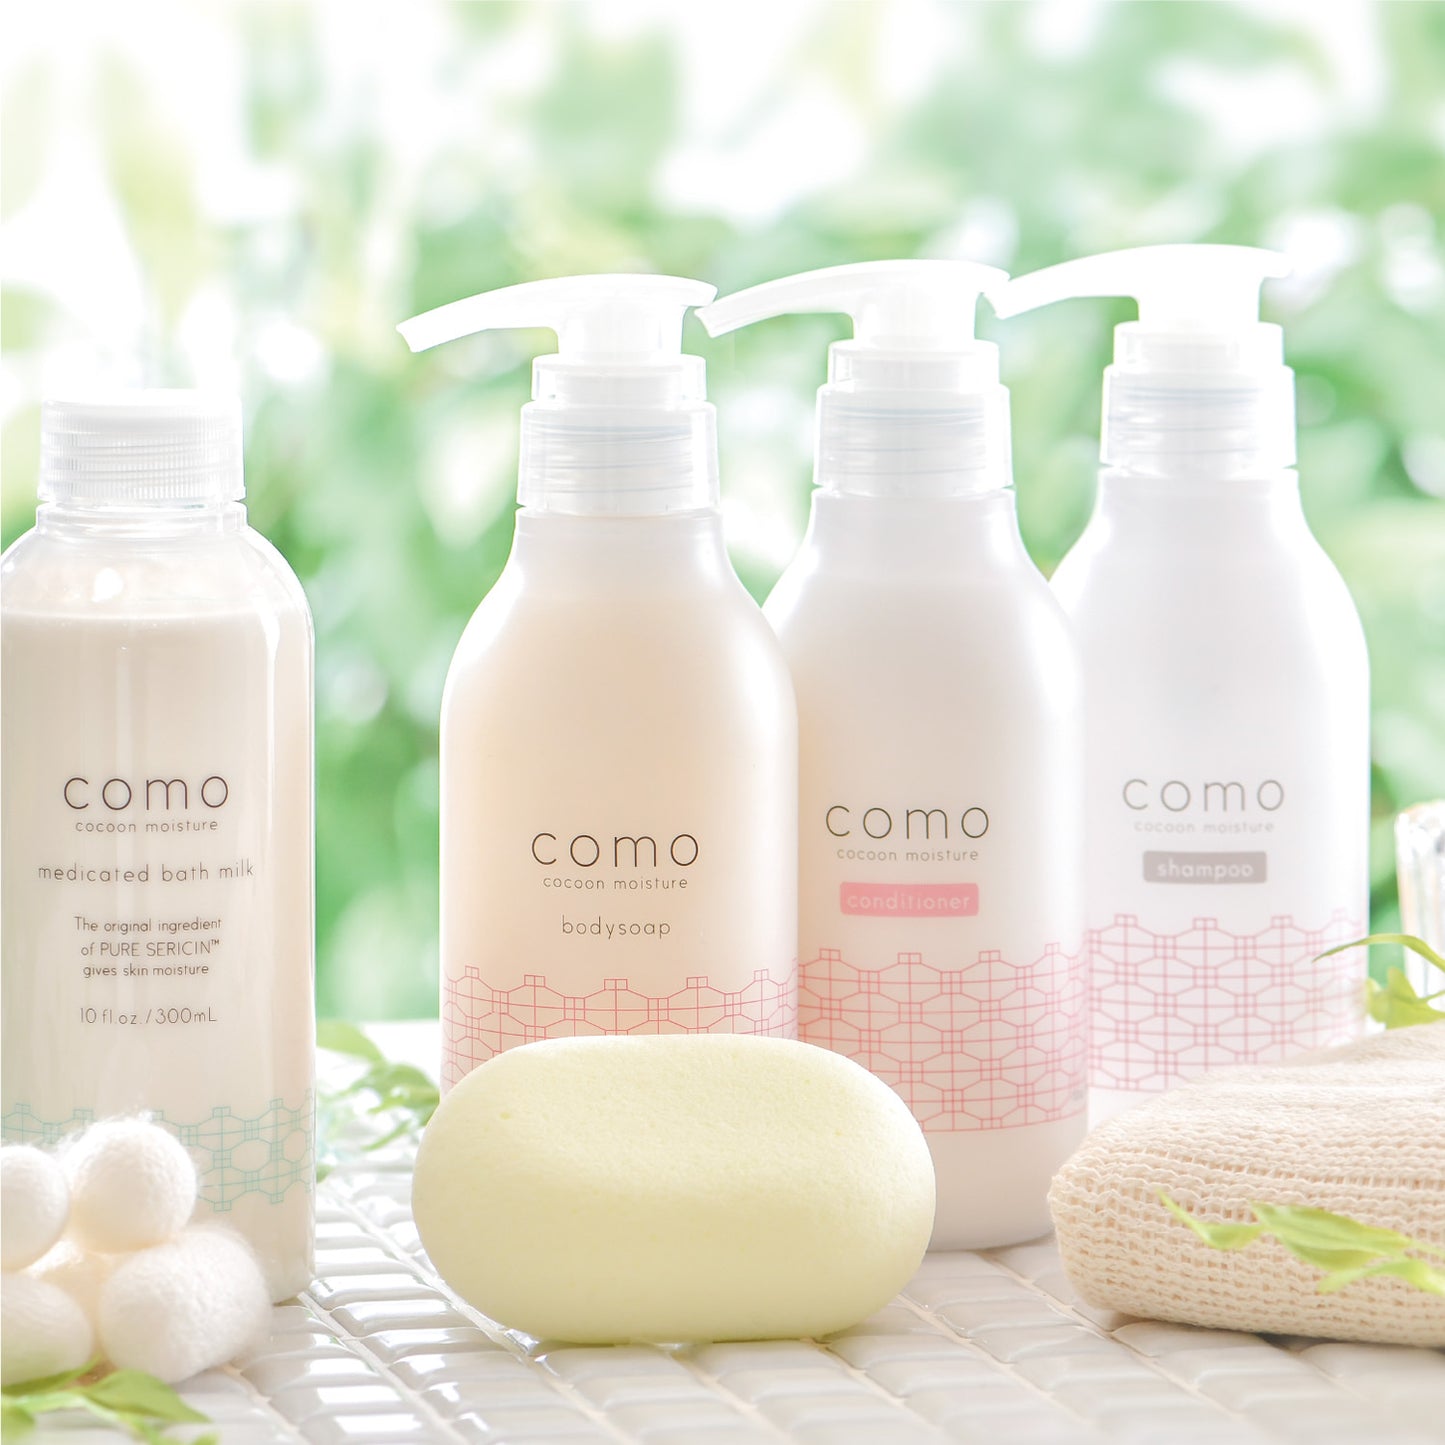 COMOACE Cocoon Moisture Body Soap